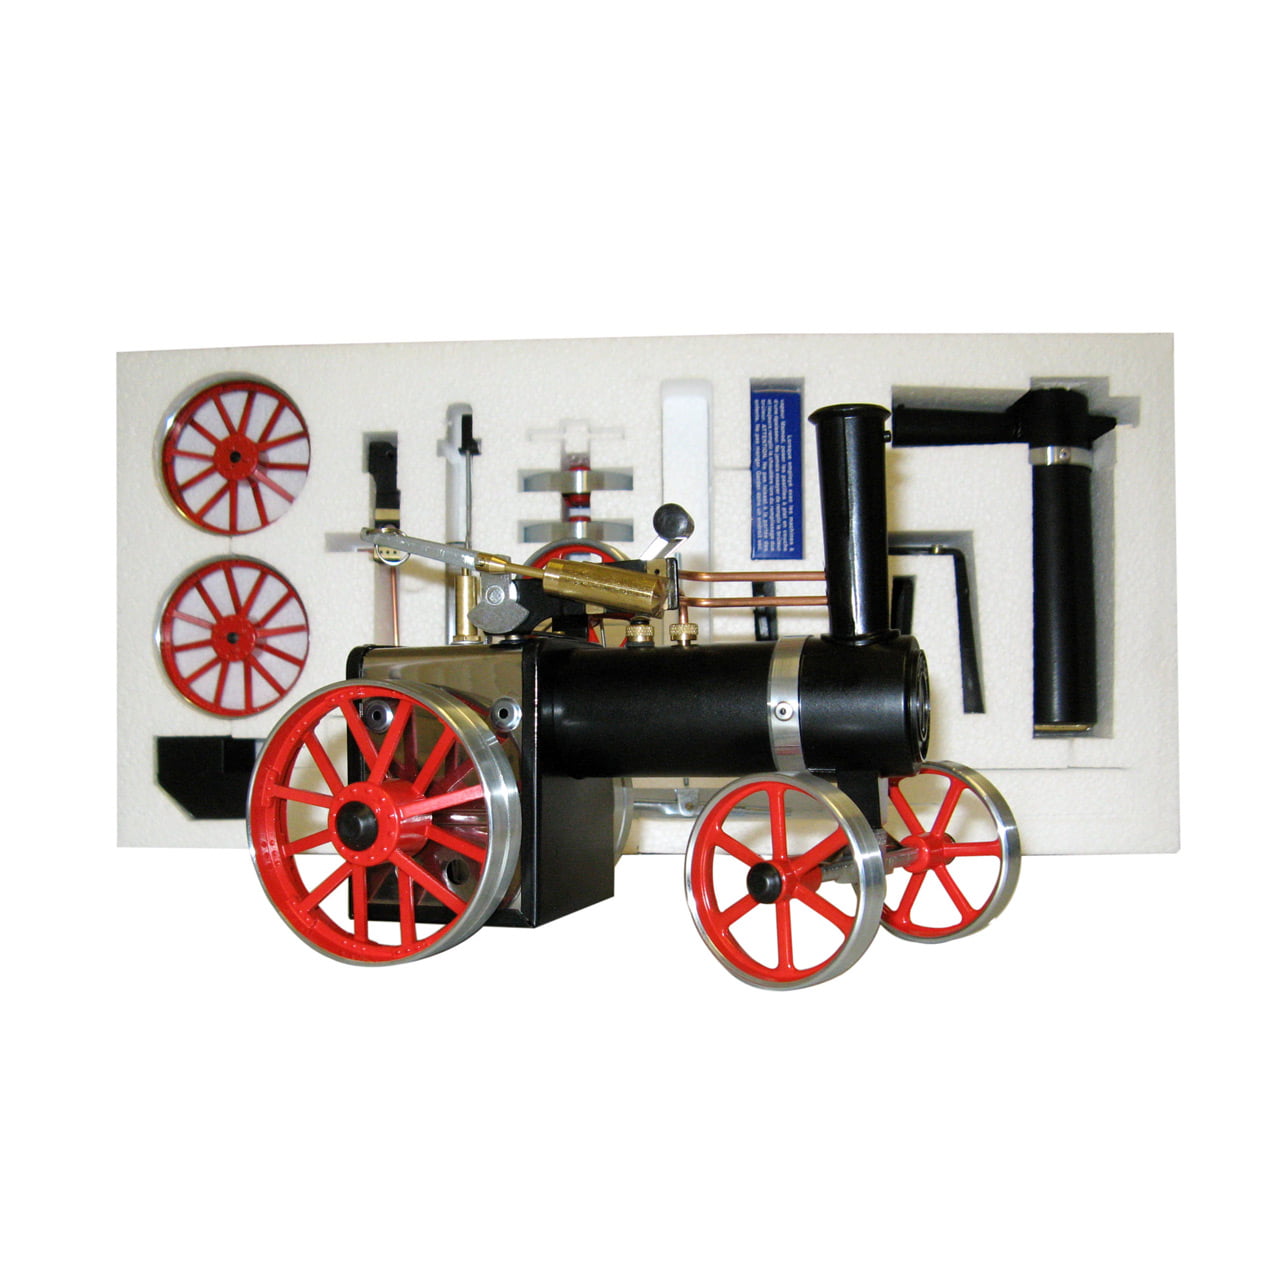 Mamod Live Steam Engines - Mamod Traction Engine Kit